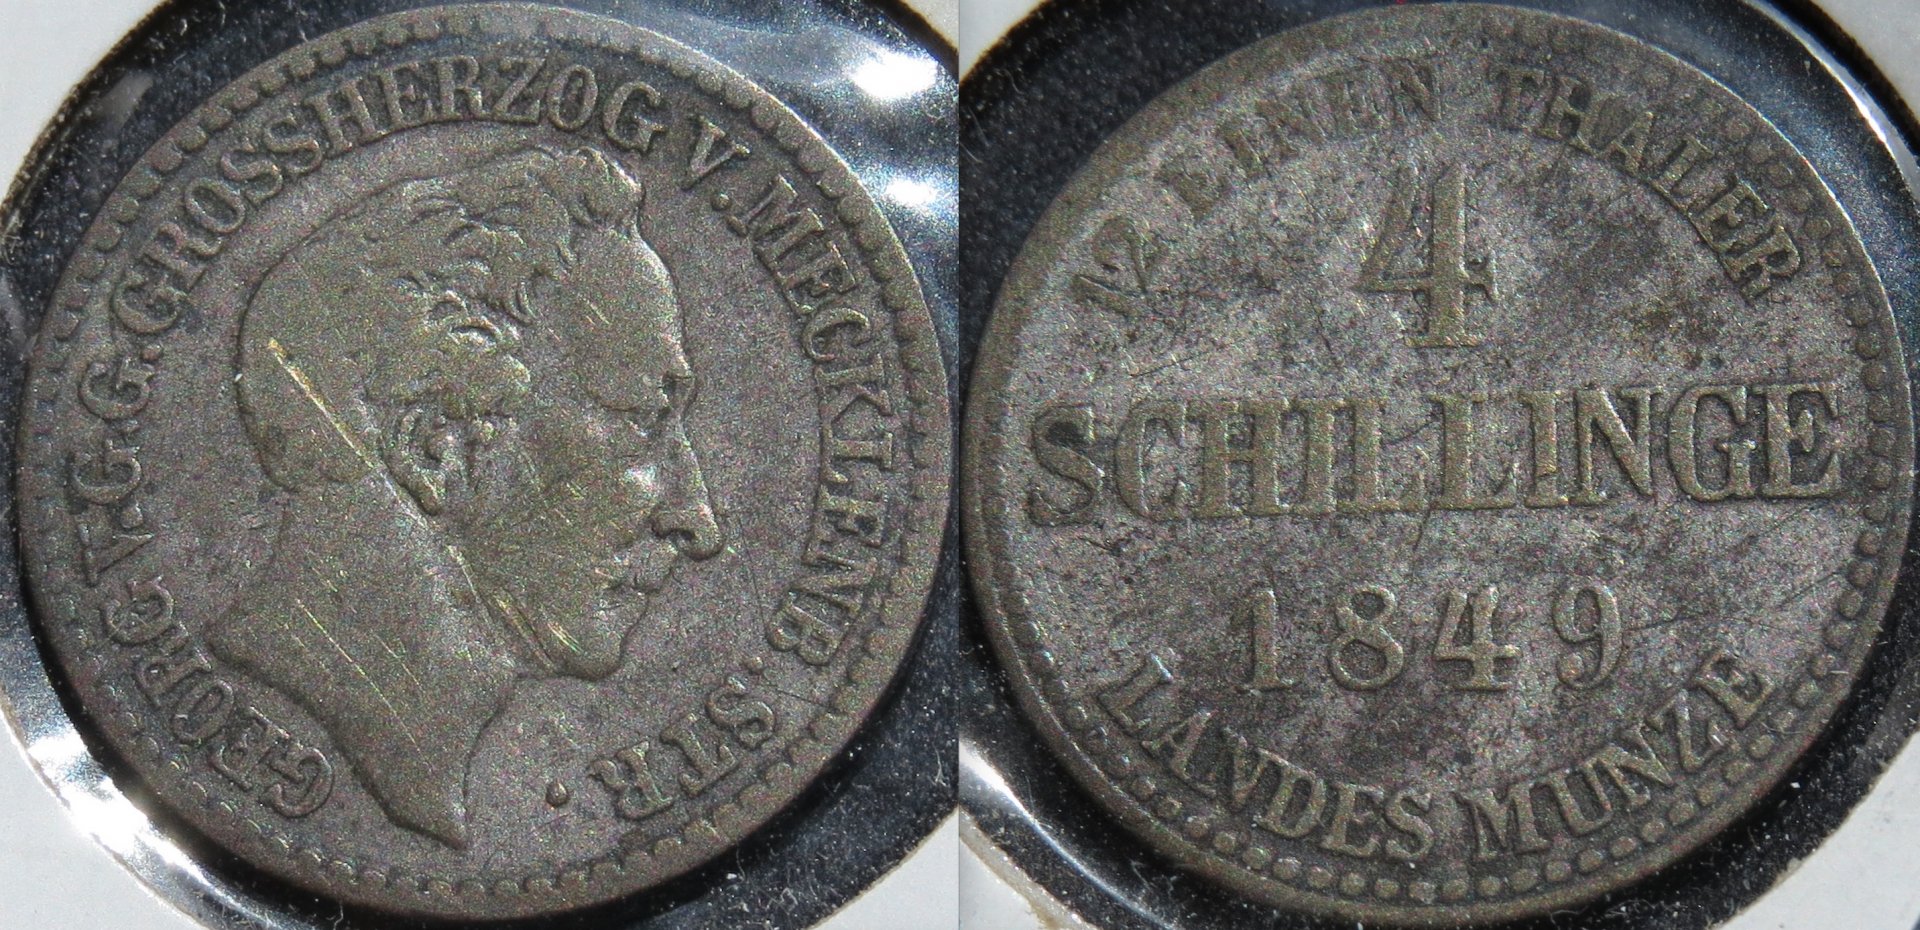 Meklenburg-Strelitz 1849 4 Schillinge Georg 0.375 billon copy.jpeg